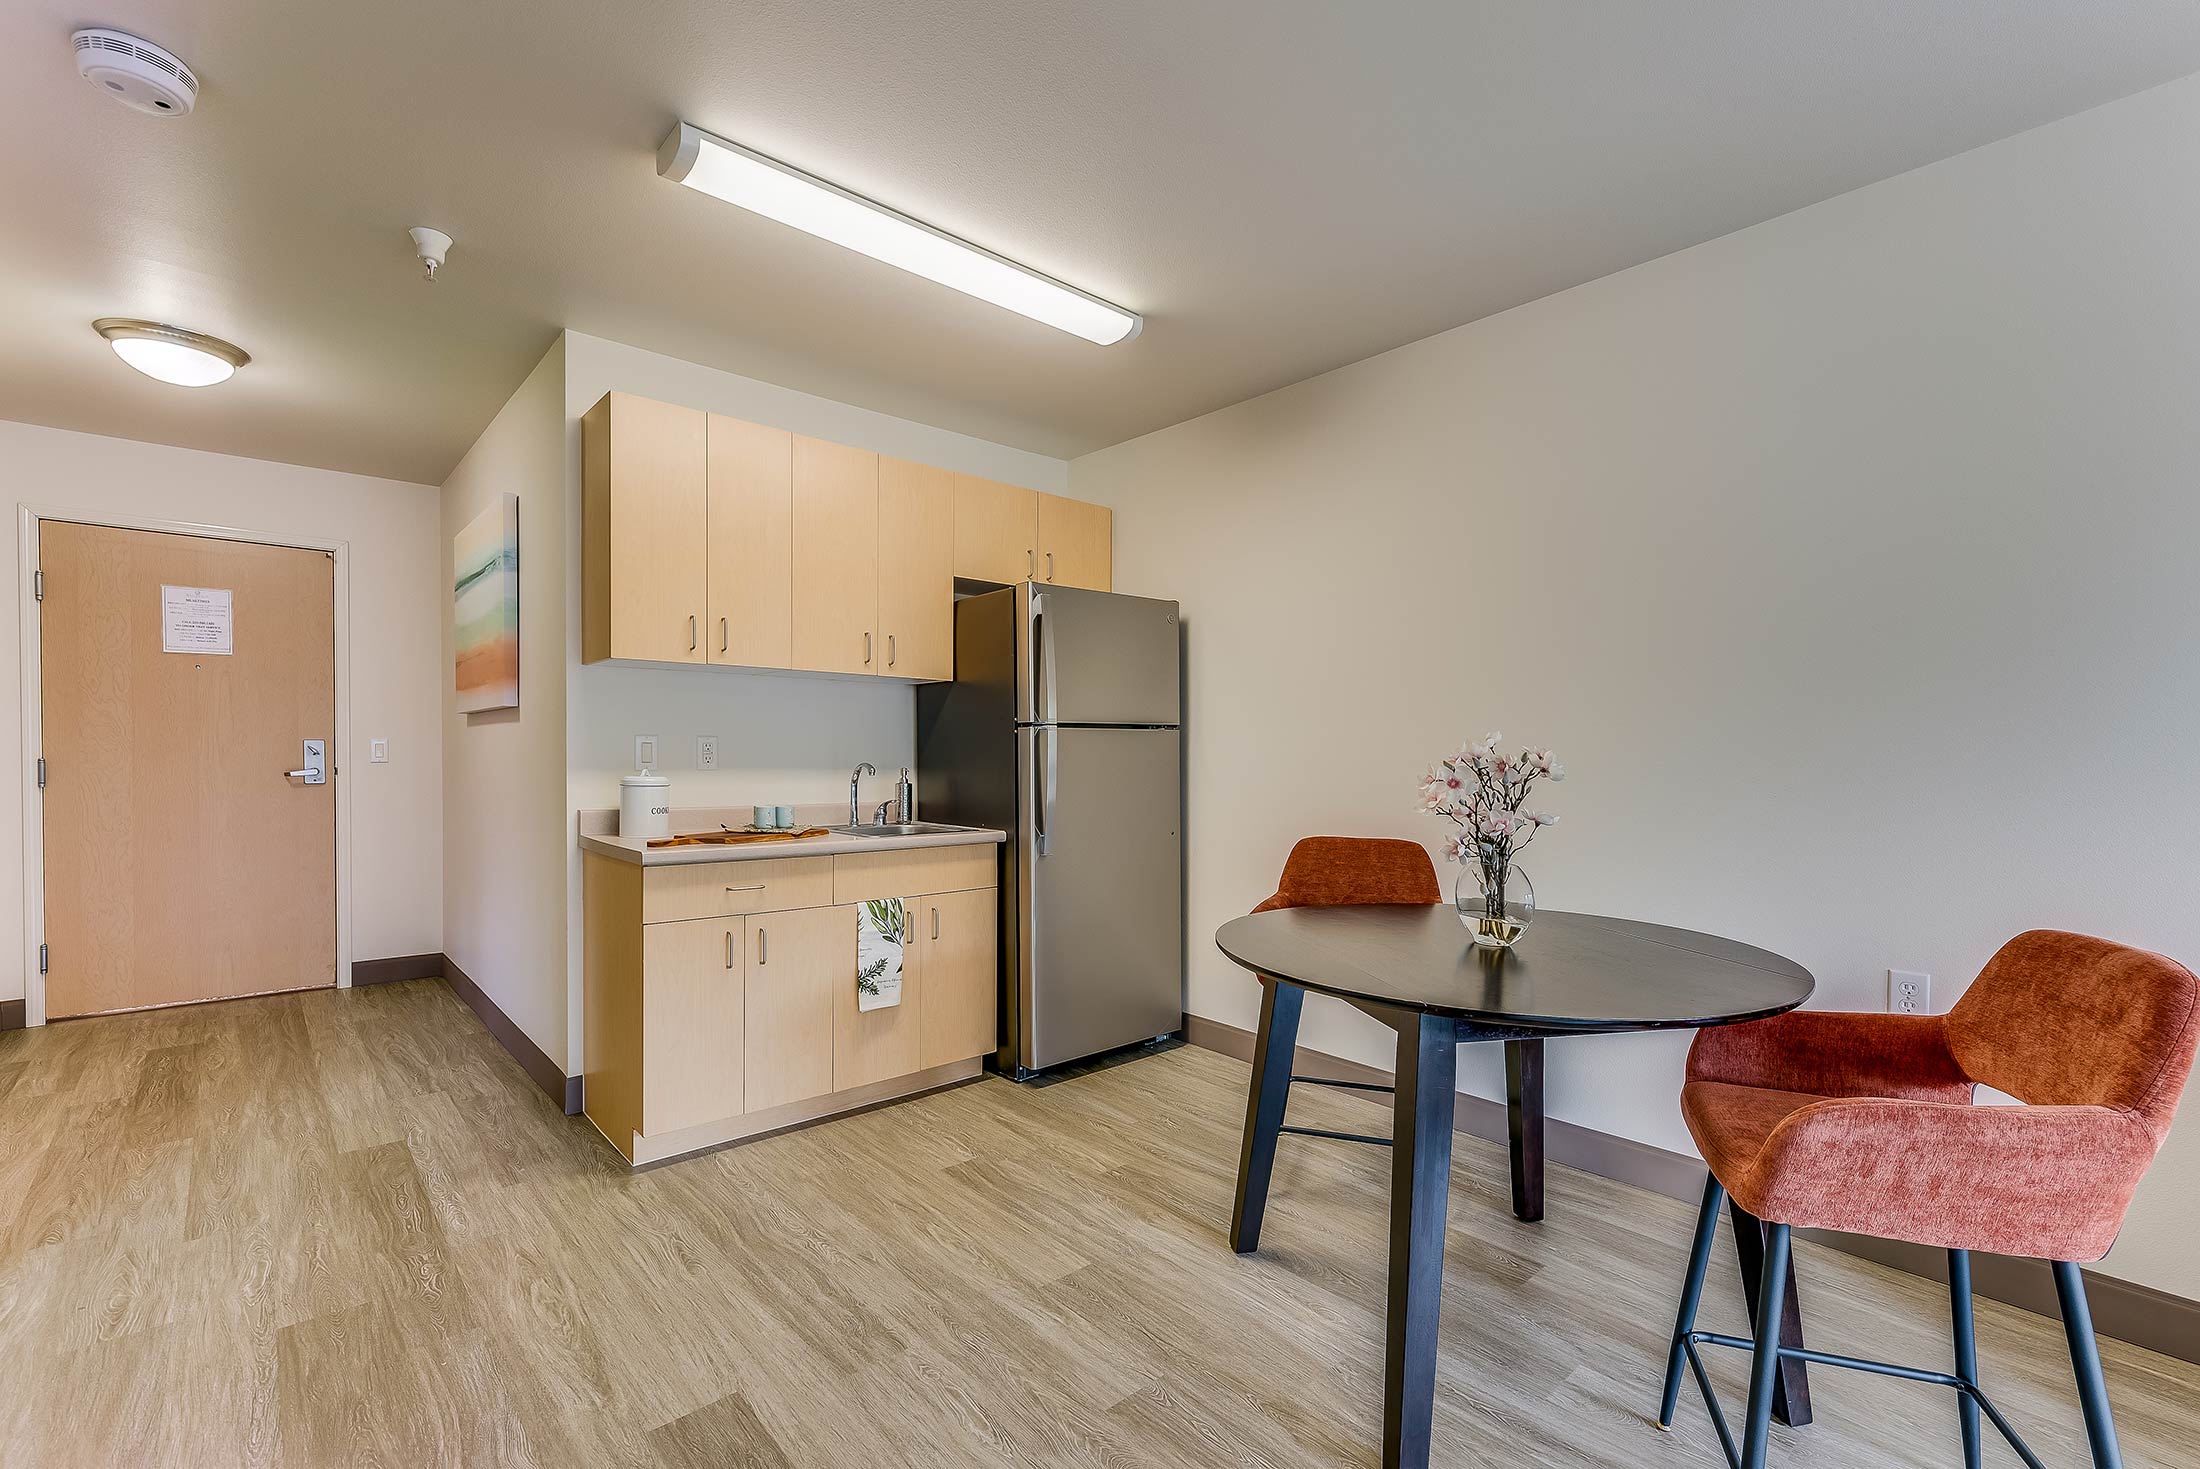 One bedroom apartment kitchen, dining room Clovis